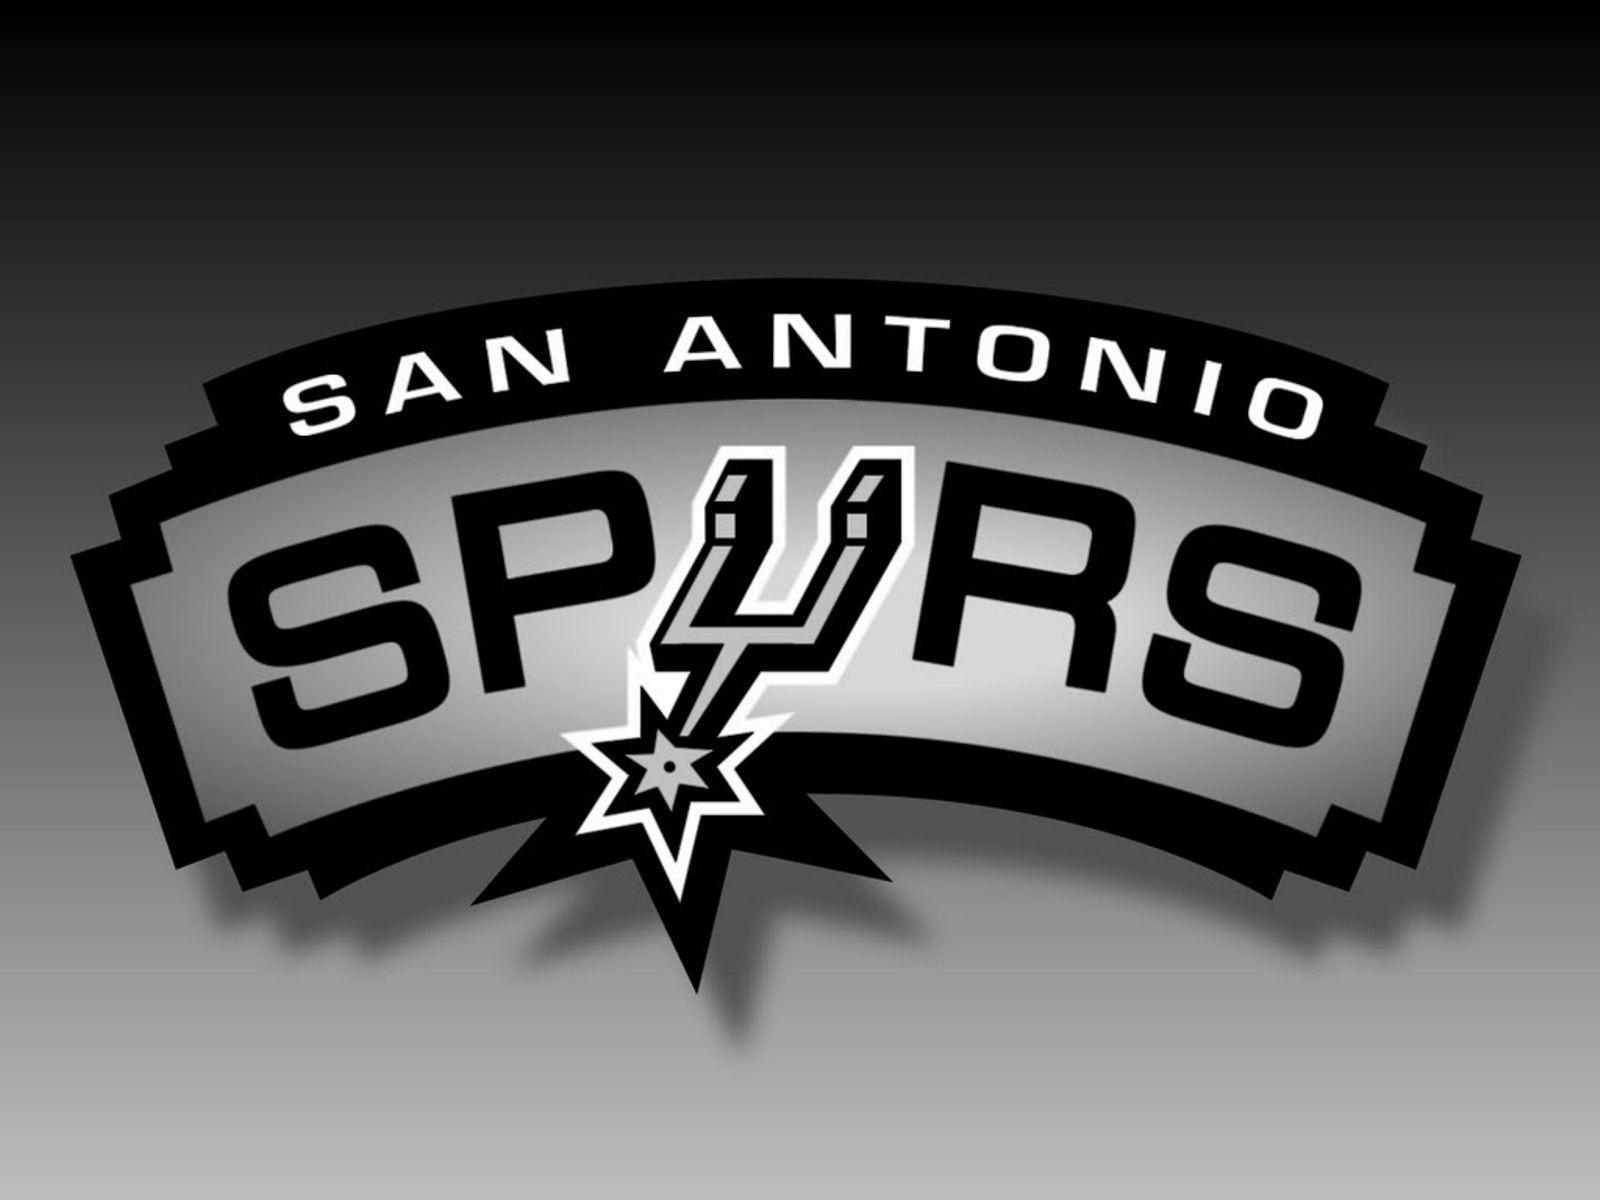 San Antonio Spurs 2014 NBA Champions Wallpaper. Hdwidescreens